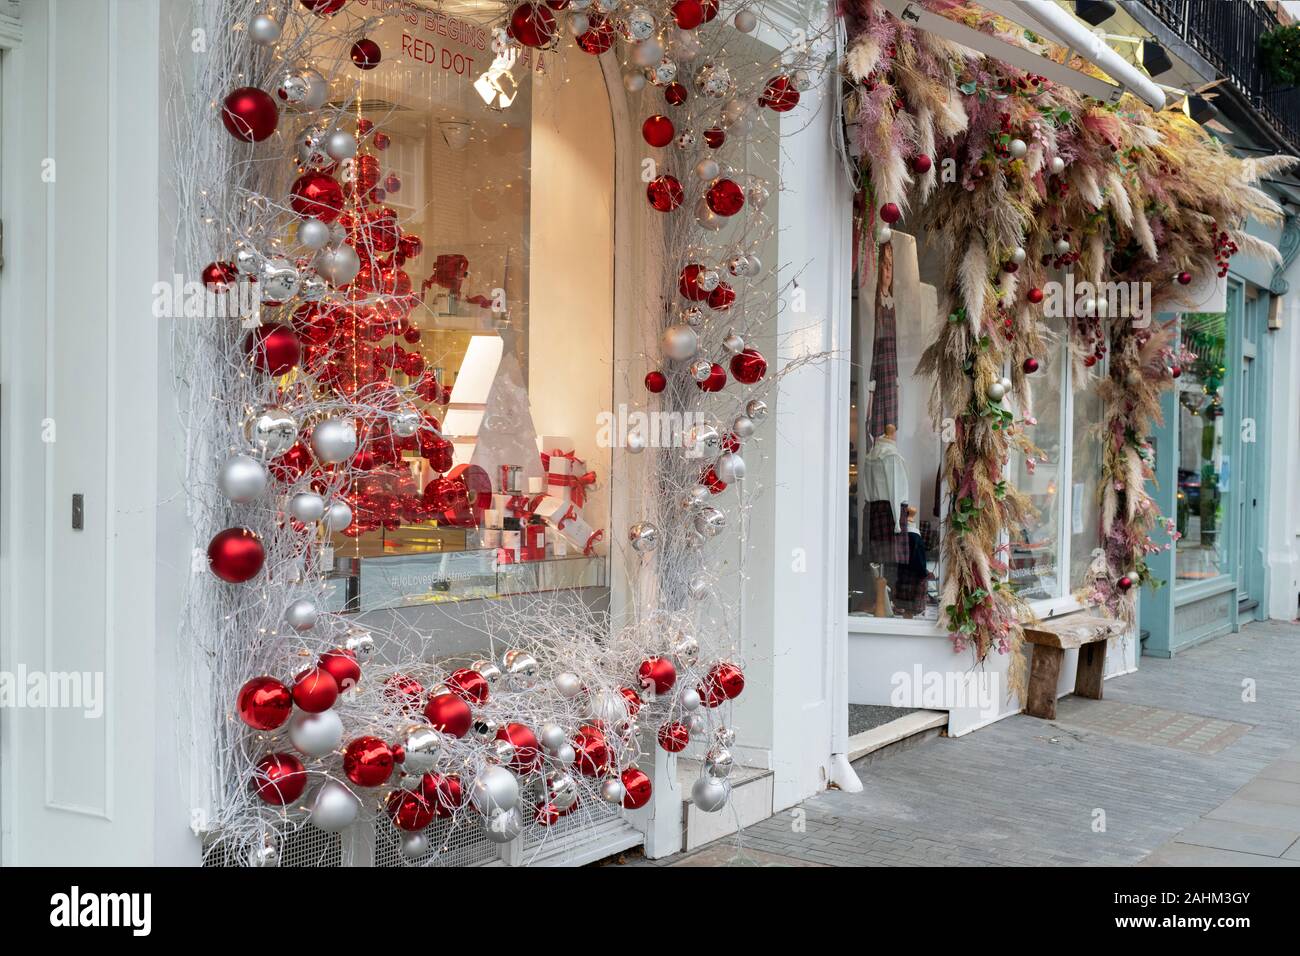 Jo liebt Shop chritsmas Fenster anzuzeigen. Elizabeth Street, Belgravia, London, England Stockfoto